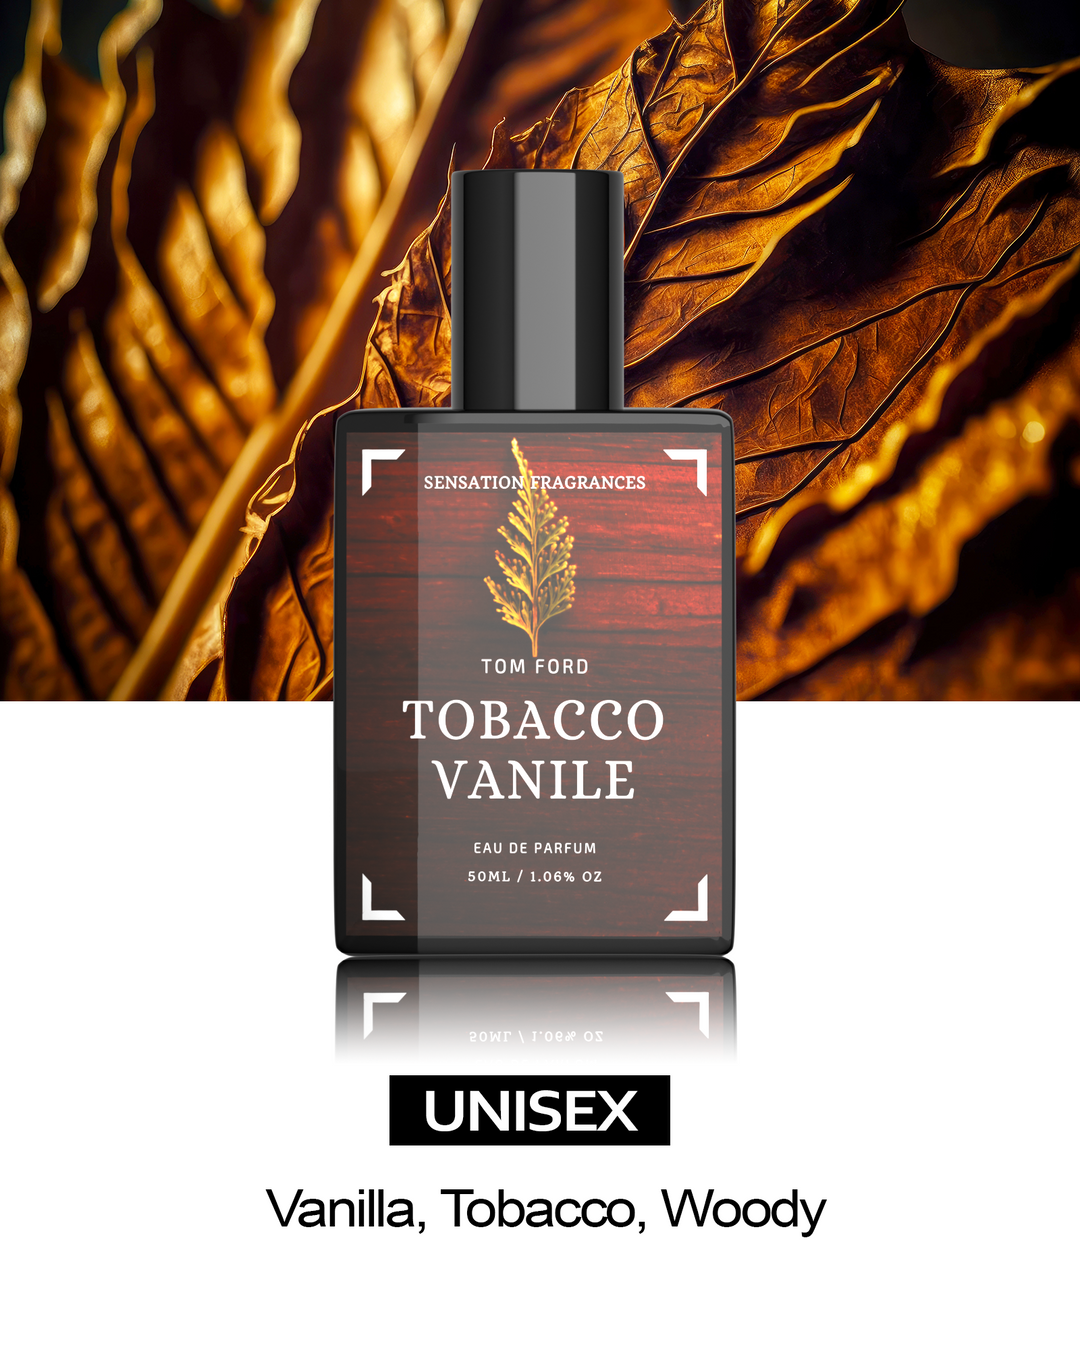 Our Impression of Tobaco Vanile